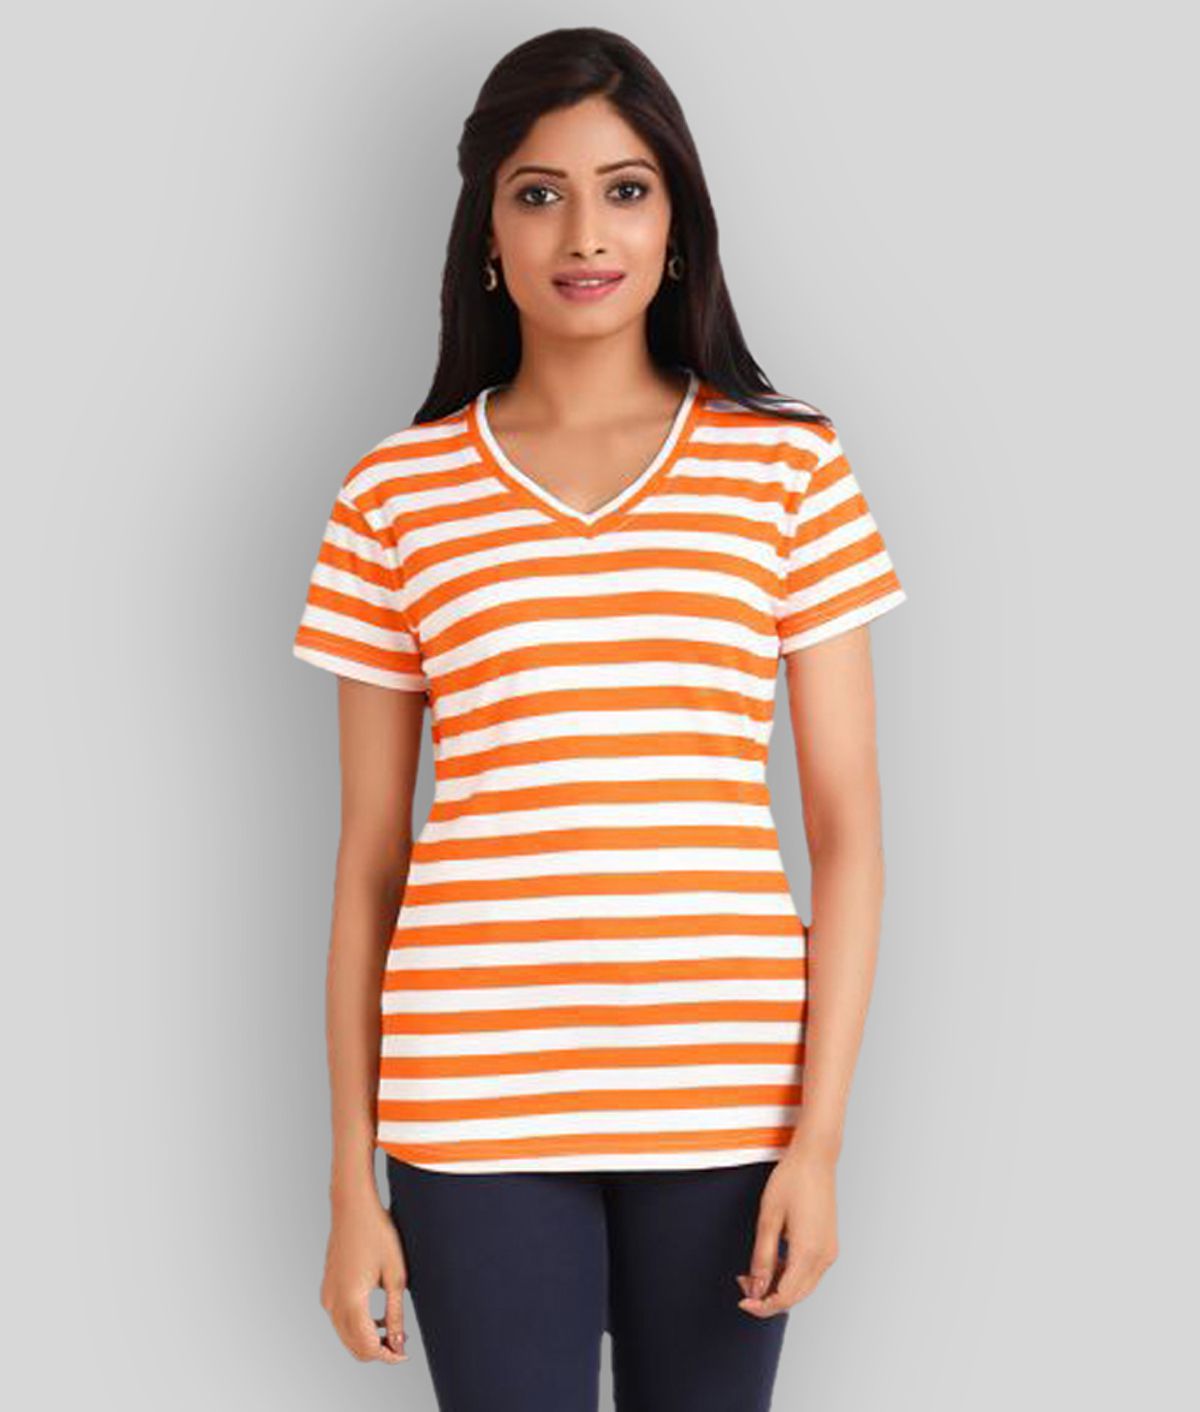     			Neo Garments - Orange Polyester Regular Fit Women's T-Shirt ( Pack of 1 )